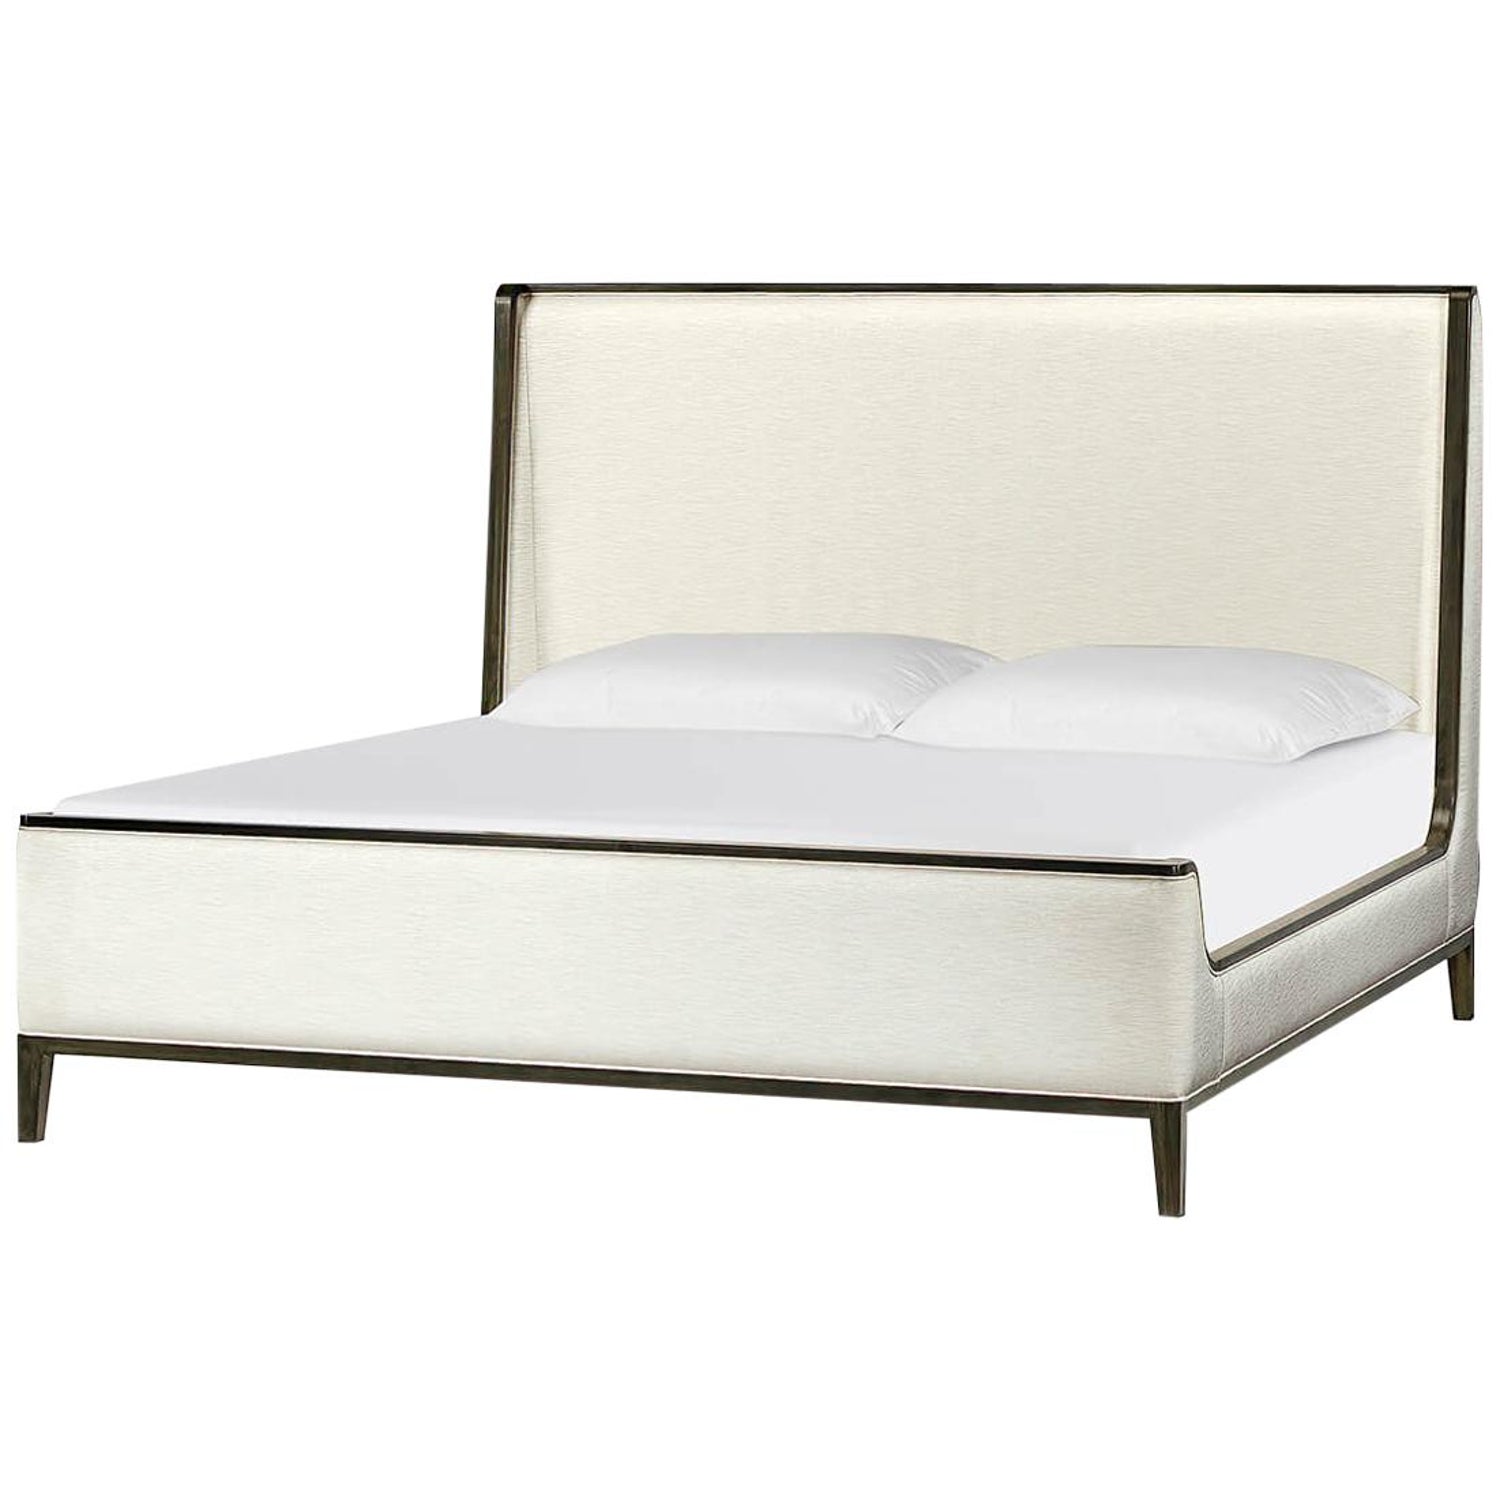 Modern Upholstered King Size Bed For, Padded King Bed Frame